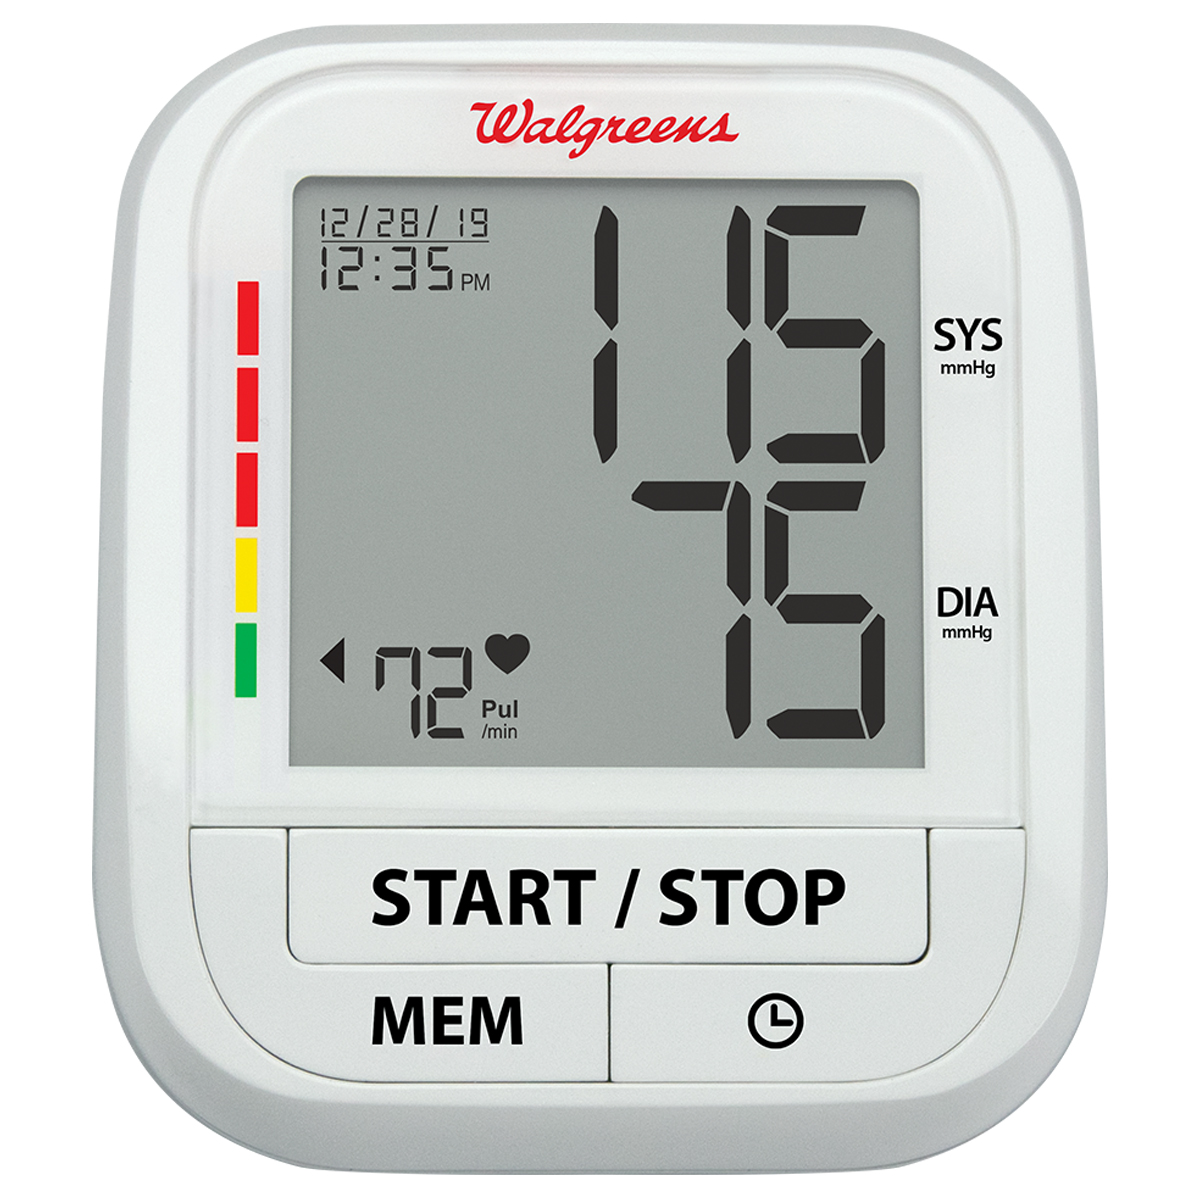 WGNBPA-220 Automatic Arm Blood Pressure Monitor